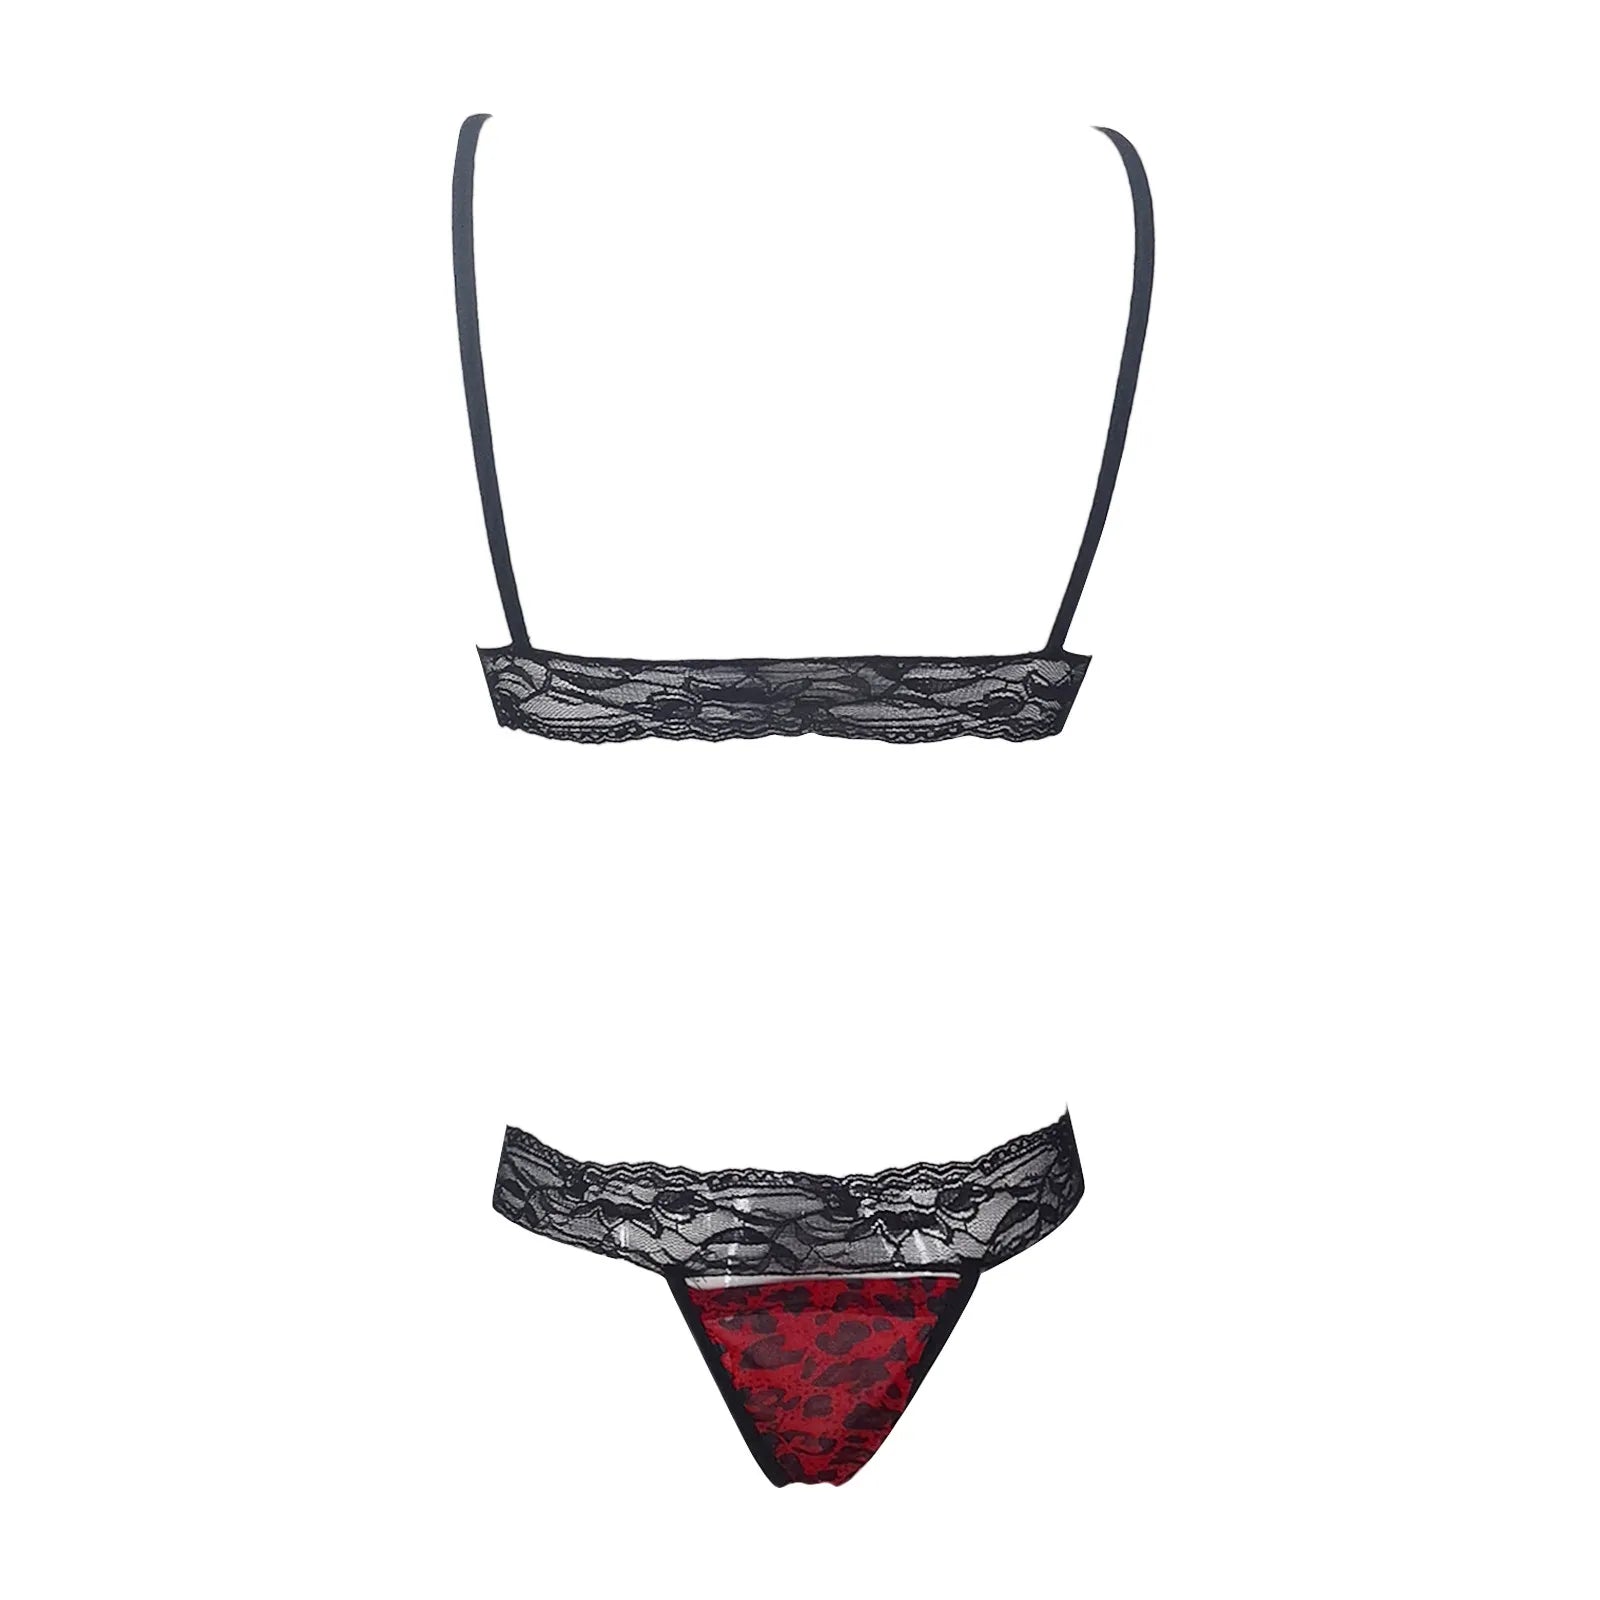 Bra Erotic Brief Sets Sexy Lingerie Sleepwear for Woman Sexy Costumes Women Underwear Sets Lace Bra Set